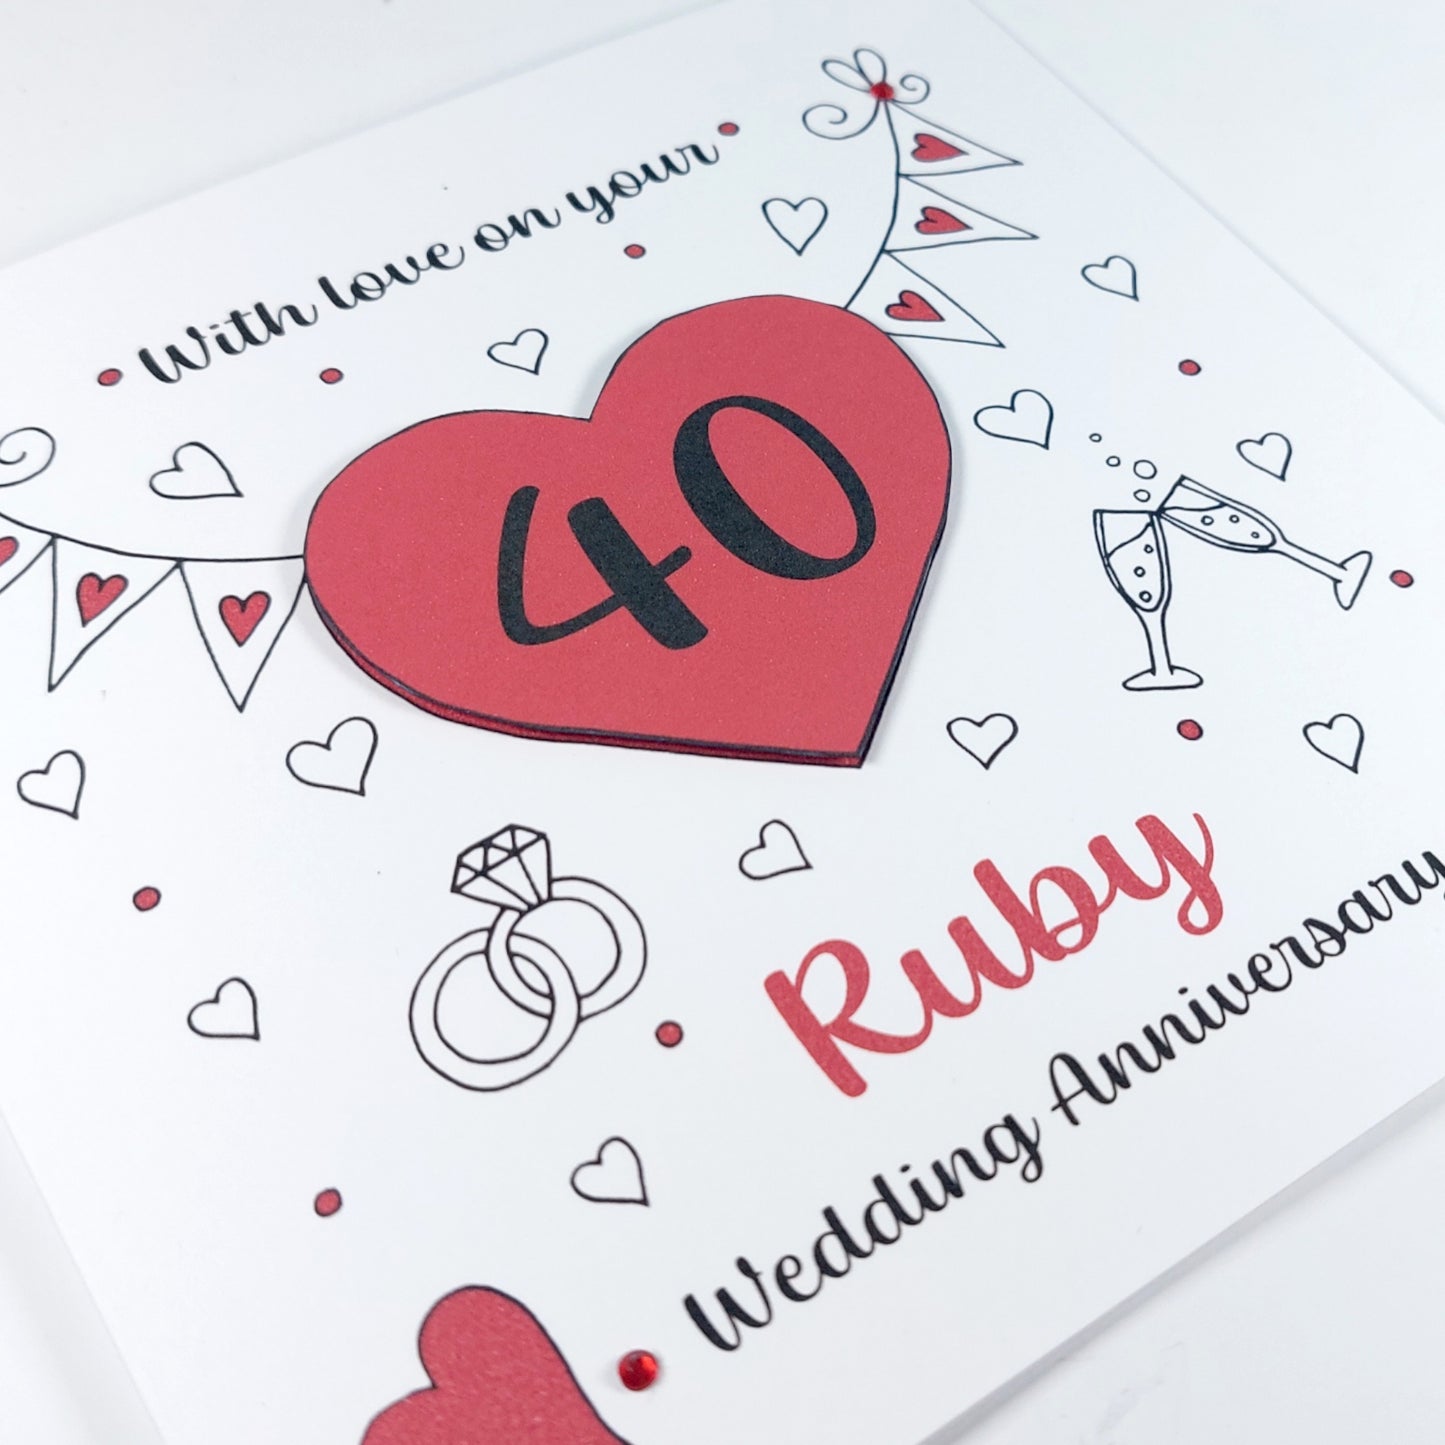 40th Ruby Heart Anniversary Card